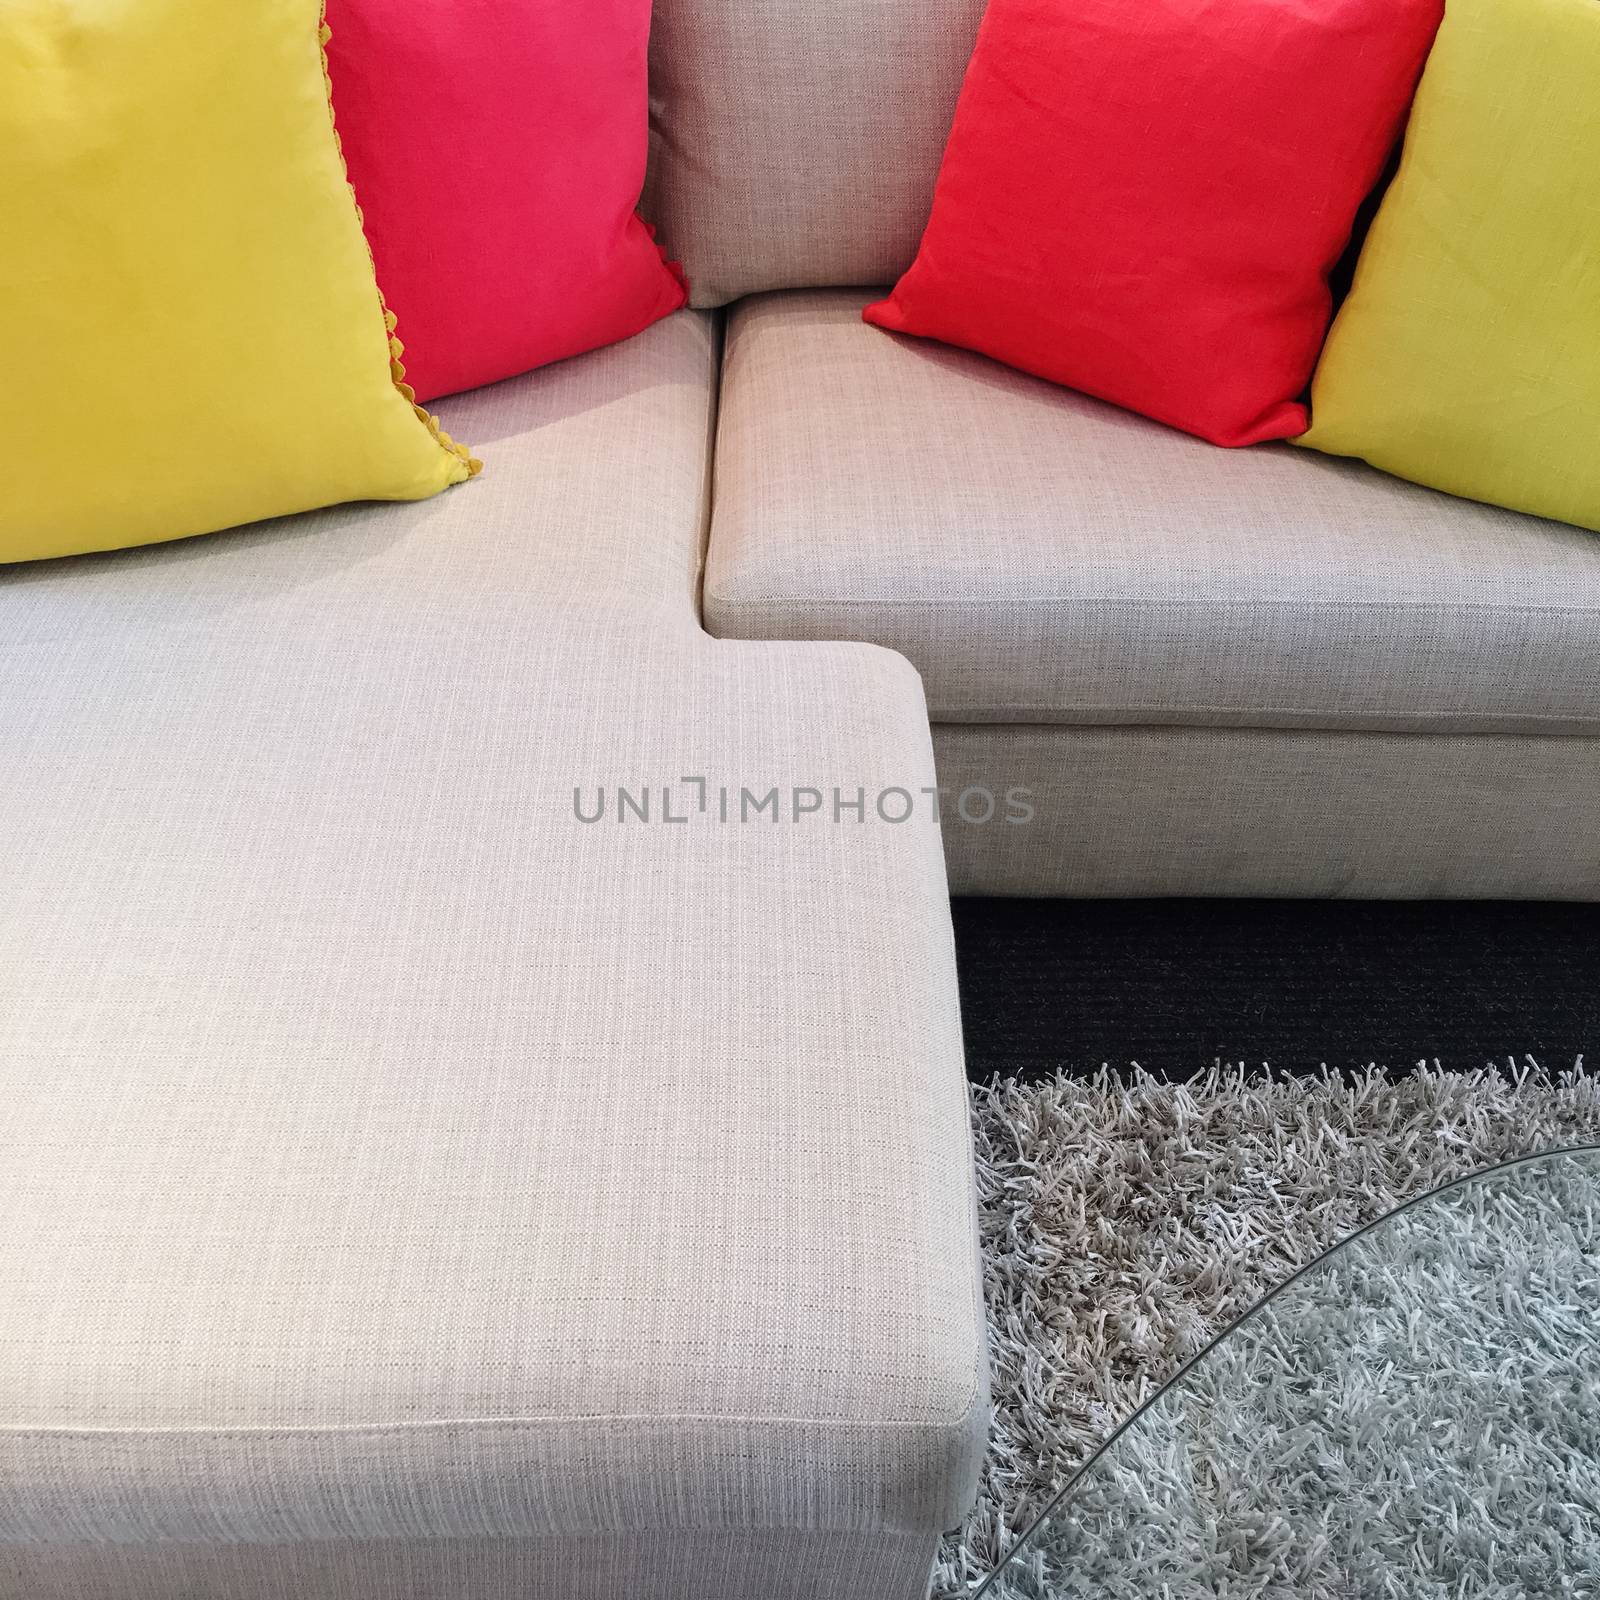 Red and yellow cushions on gray corner sofa by anikasalsera